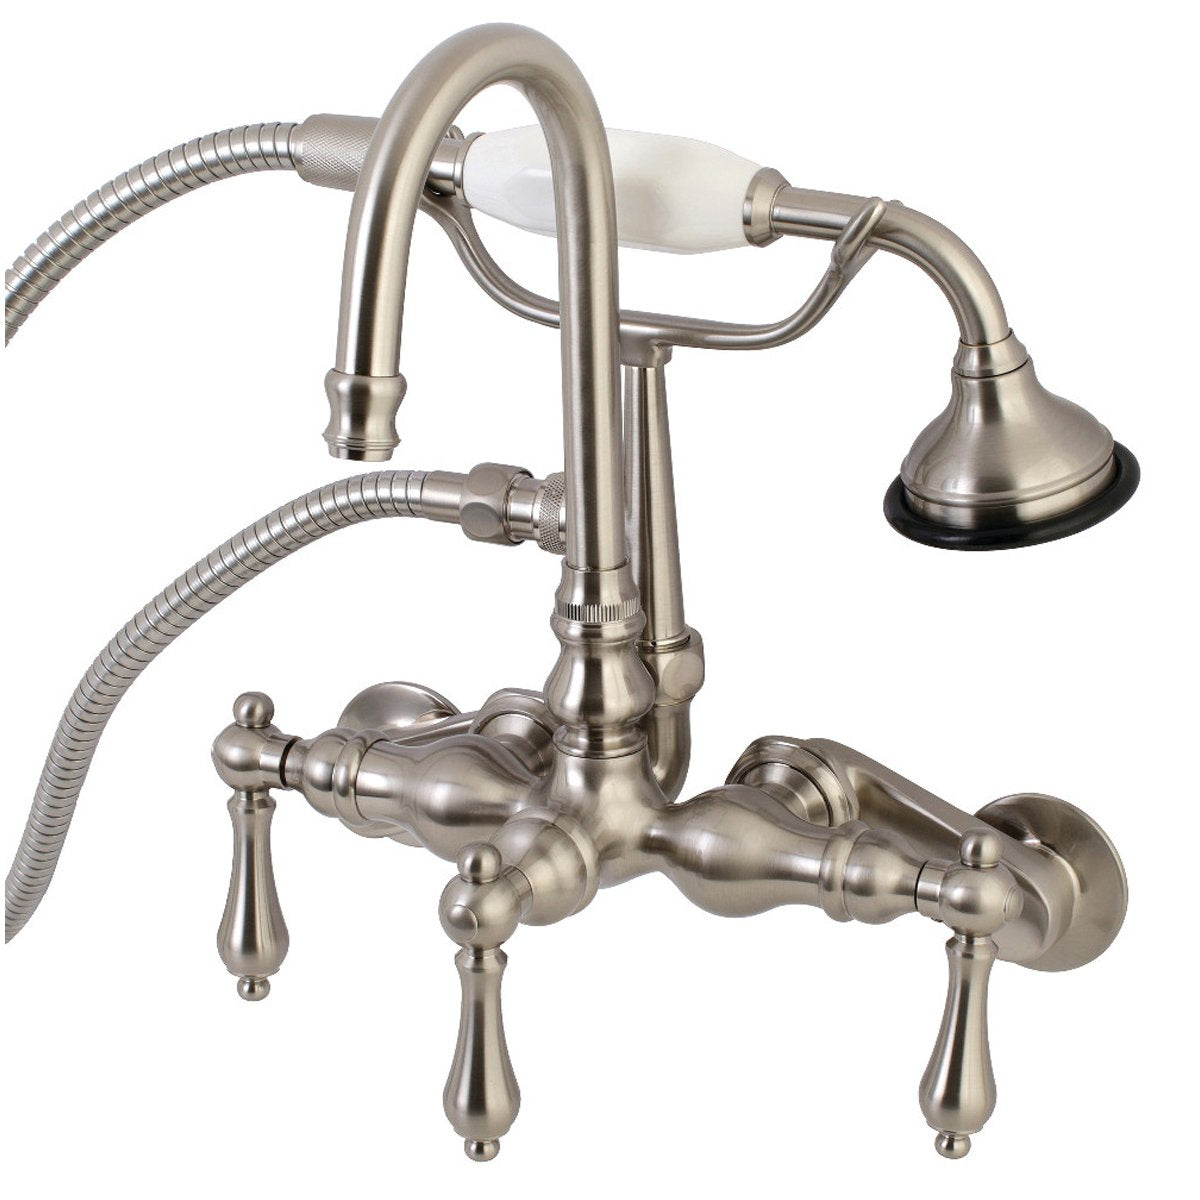 Kingston Brass AE301TX-P Aqua Vintage Wall Mount Clawfoot Tub Faucets